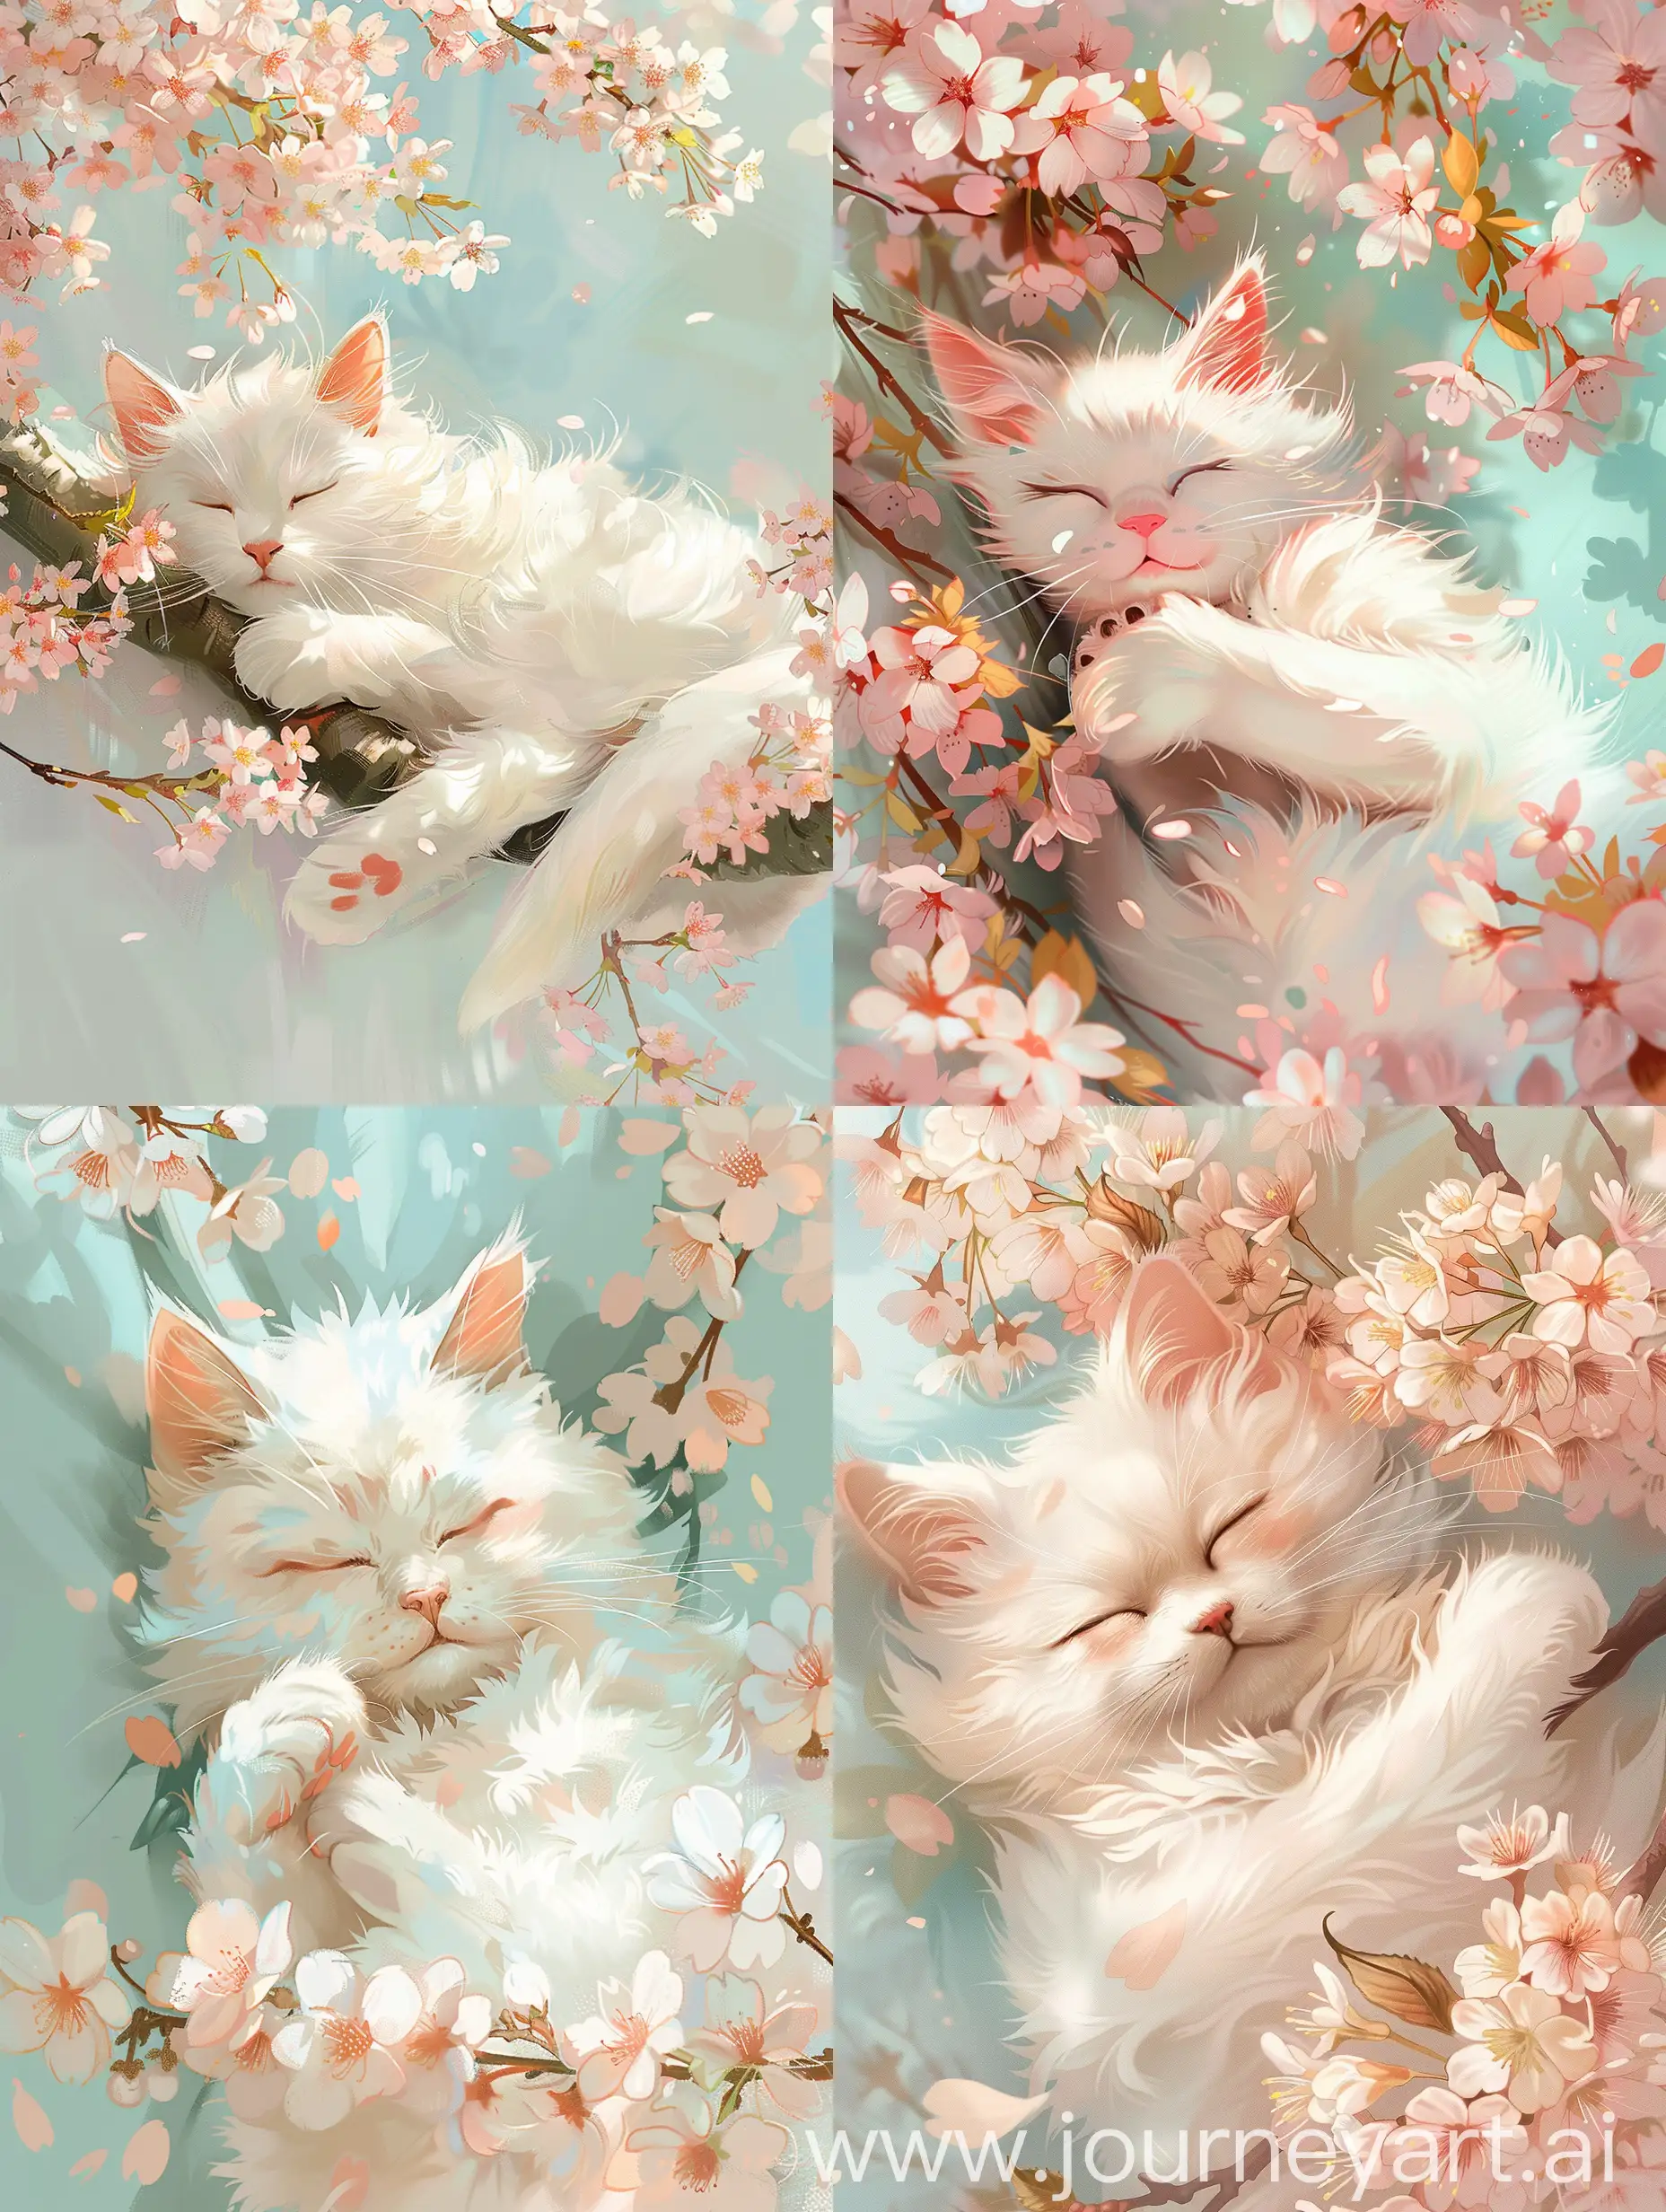 Sleeping white fluffy kitty, sleeping in sakura flowers, spring background, light blue, light pink, light yellow, peach colour, soft anime art